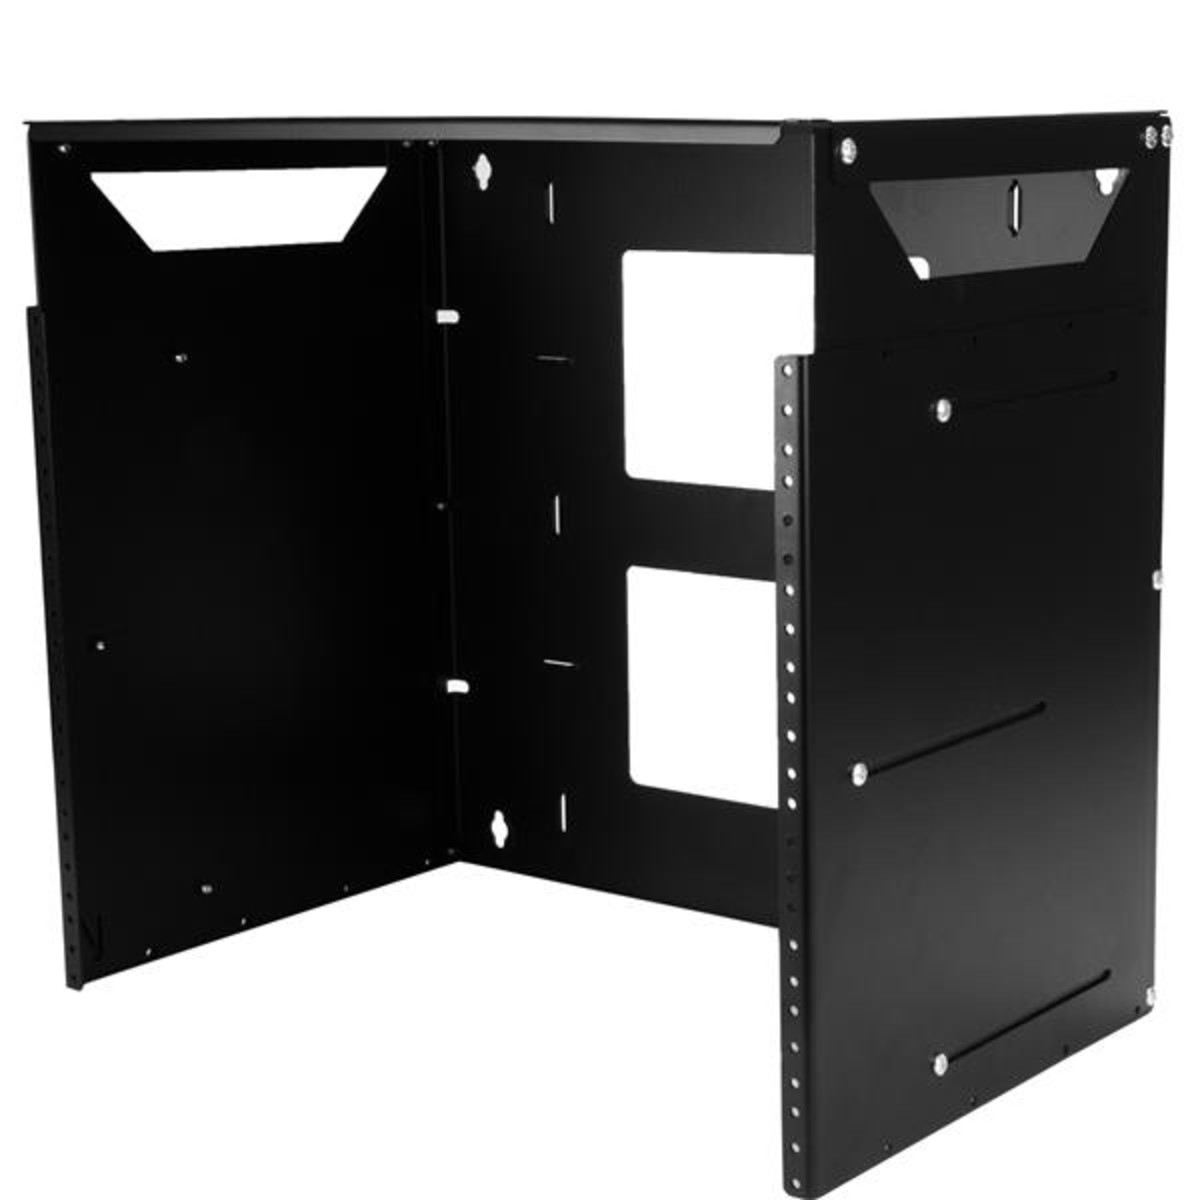 8U WM Server Rack with Shelf